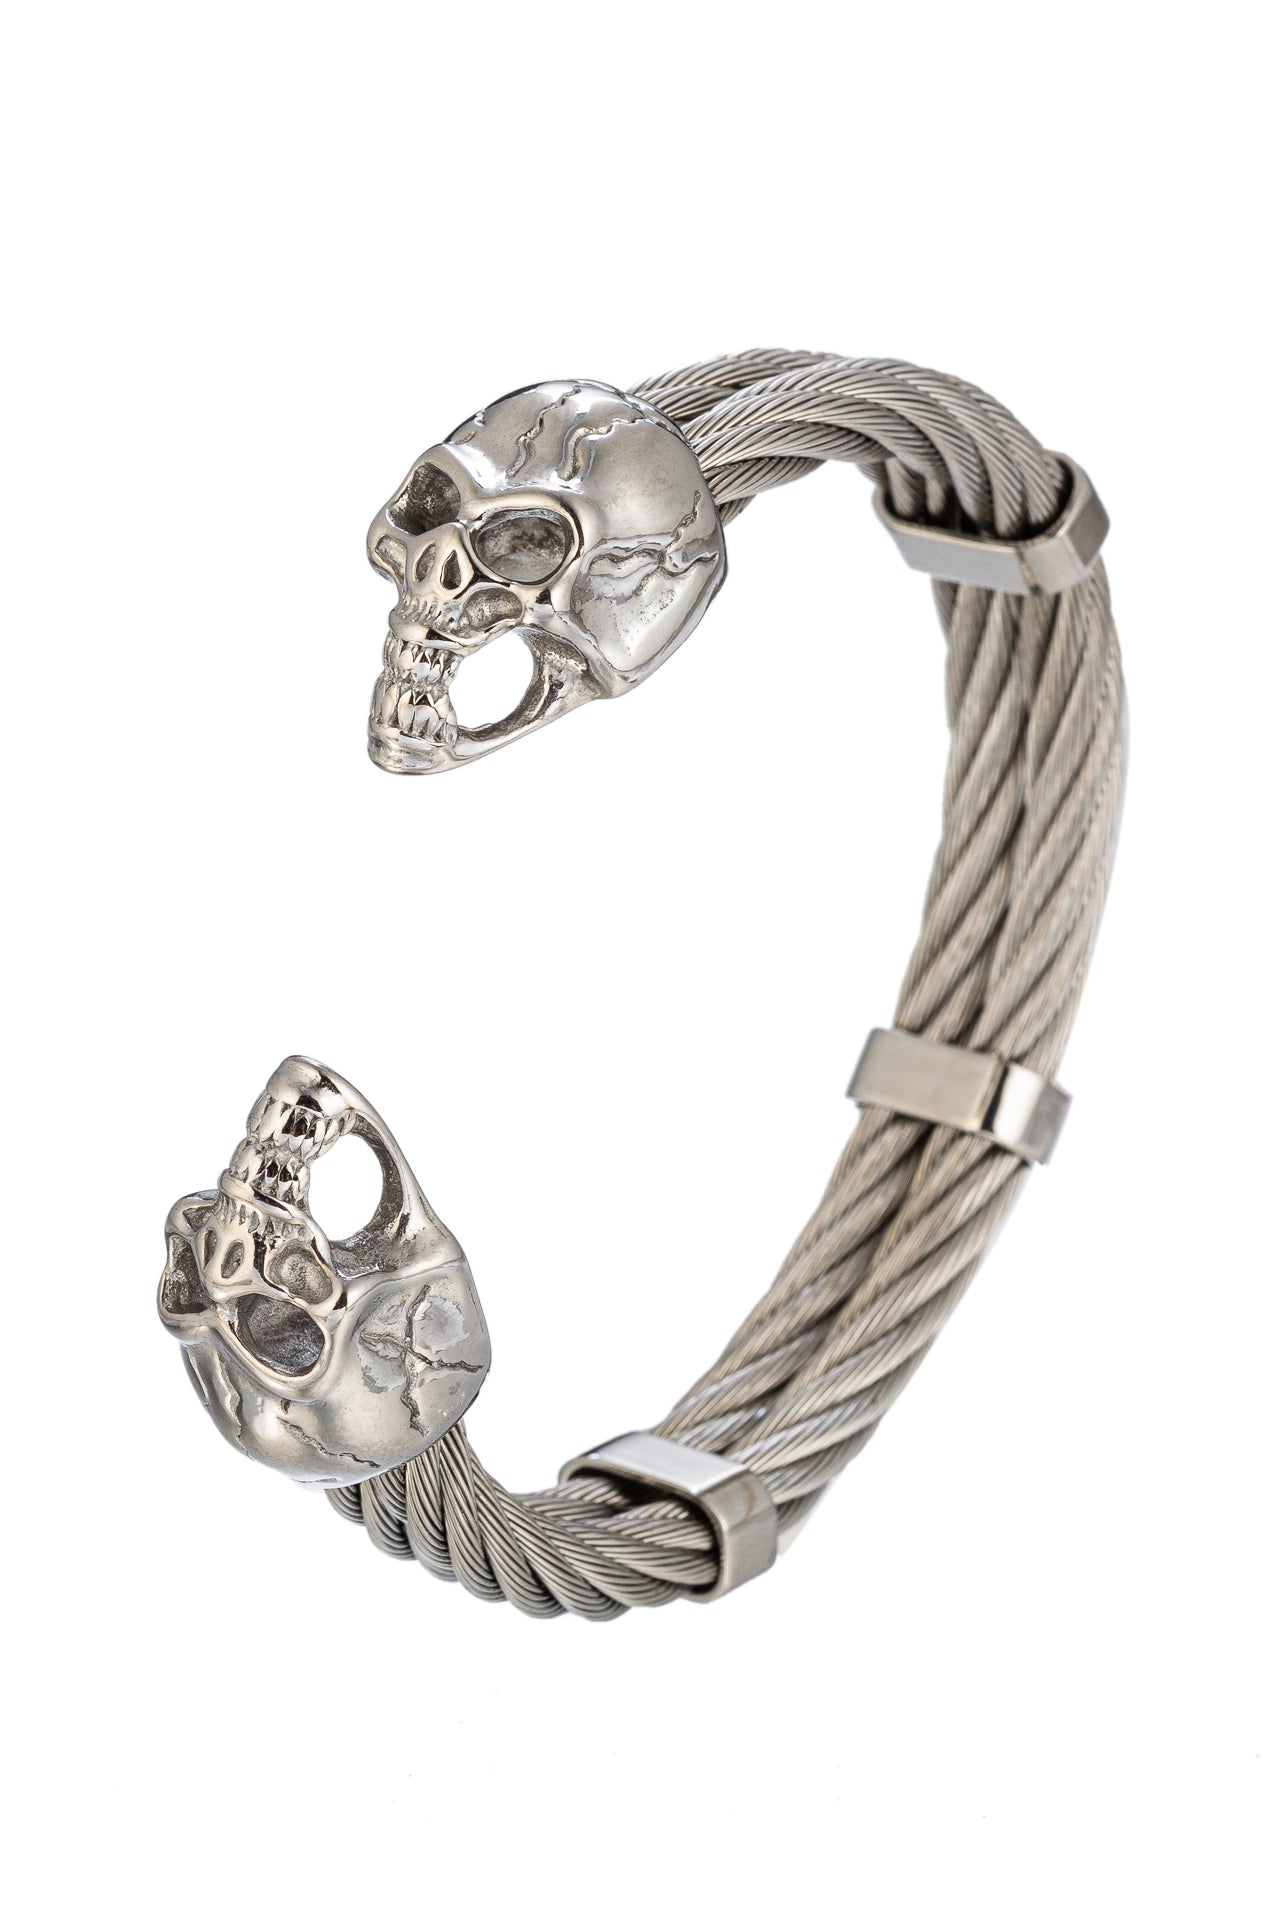 Buy Silveralexa Sterling Silver Skull Bracelet Chain Toggle Bone Closure  Full Jaw Skulls Online in India - Etsy